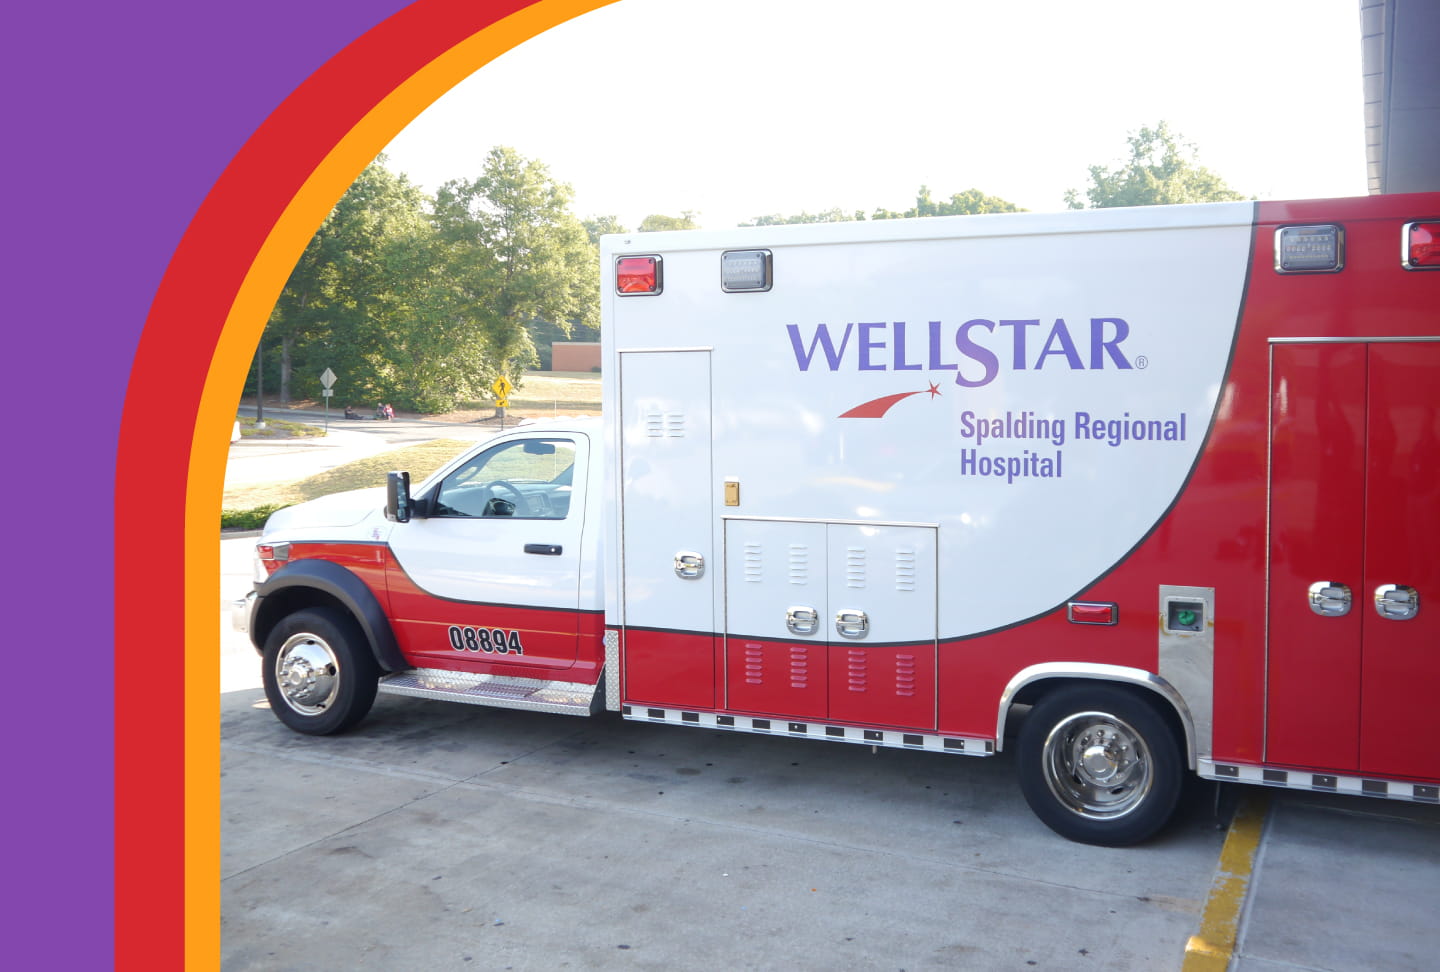 EMS truck with the Wellstar Spalding Regional Hospital logo.